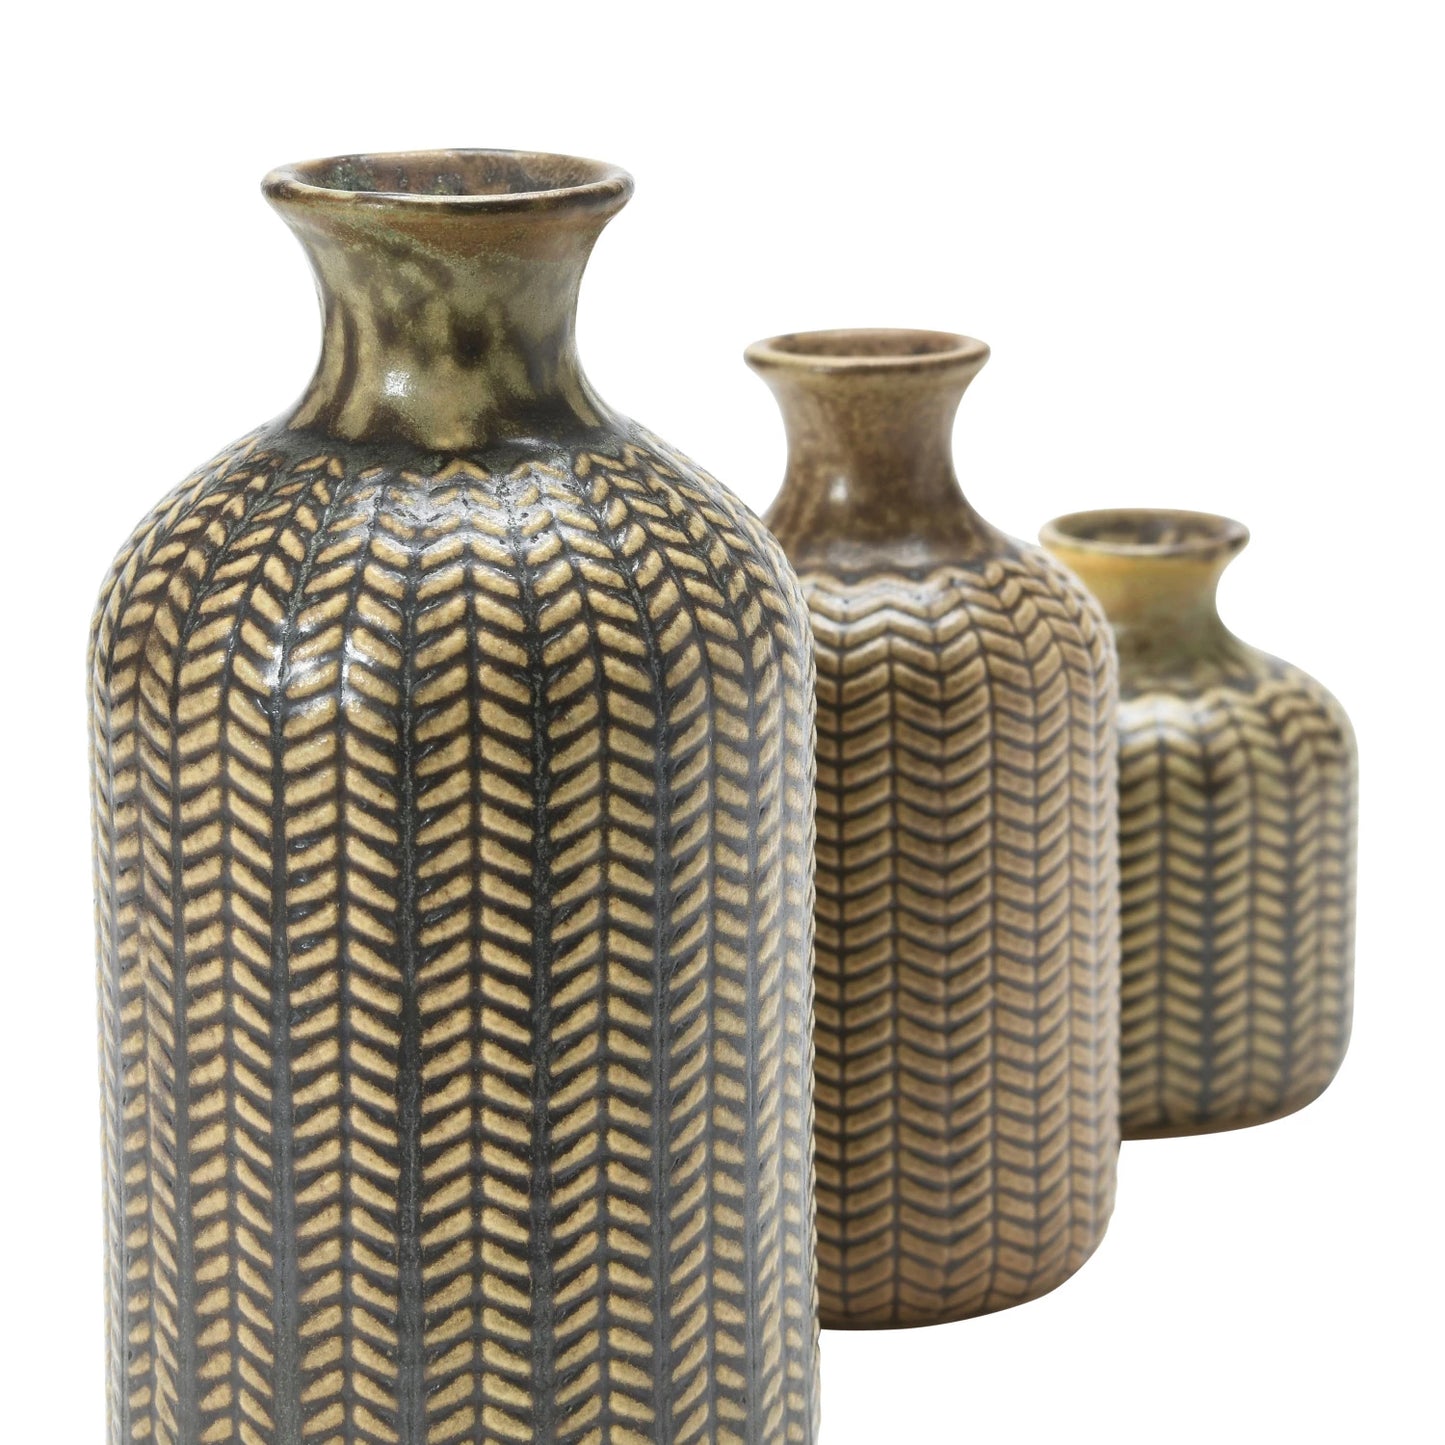 close-up of stoneware vase showing embossed pattern.